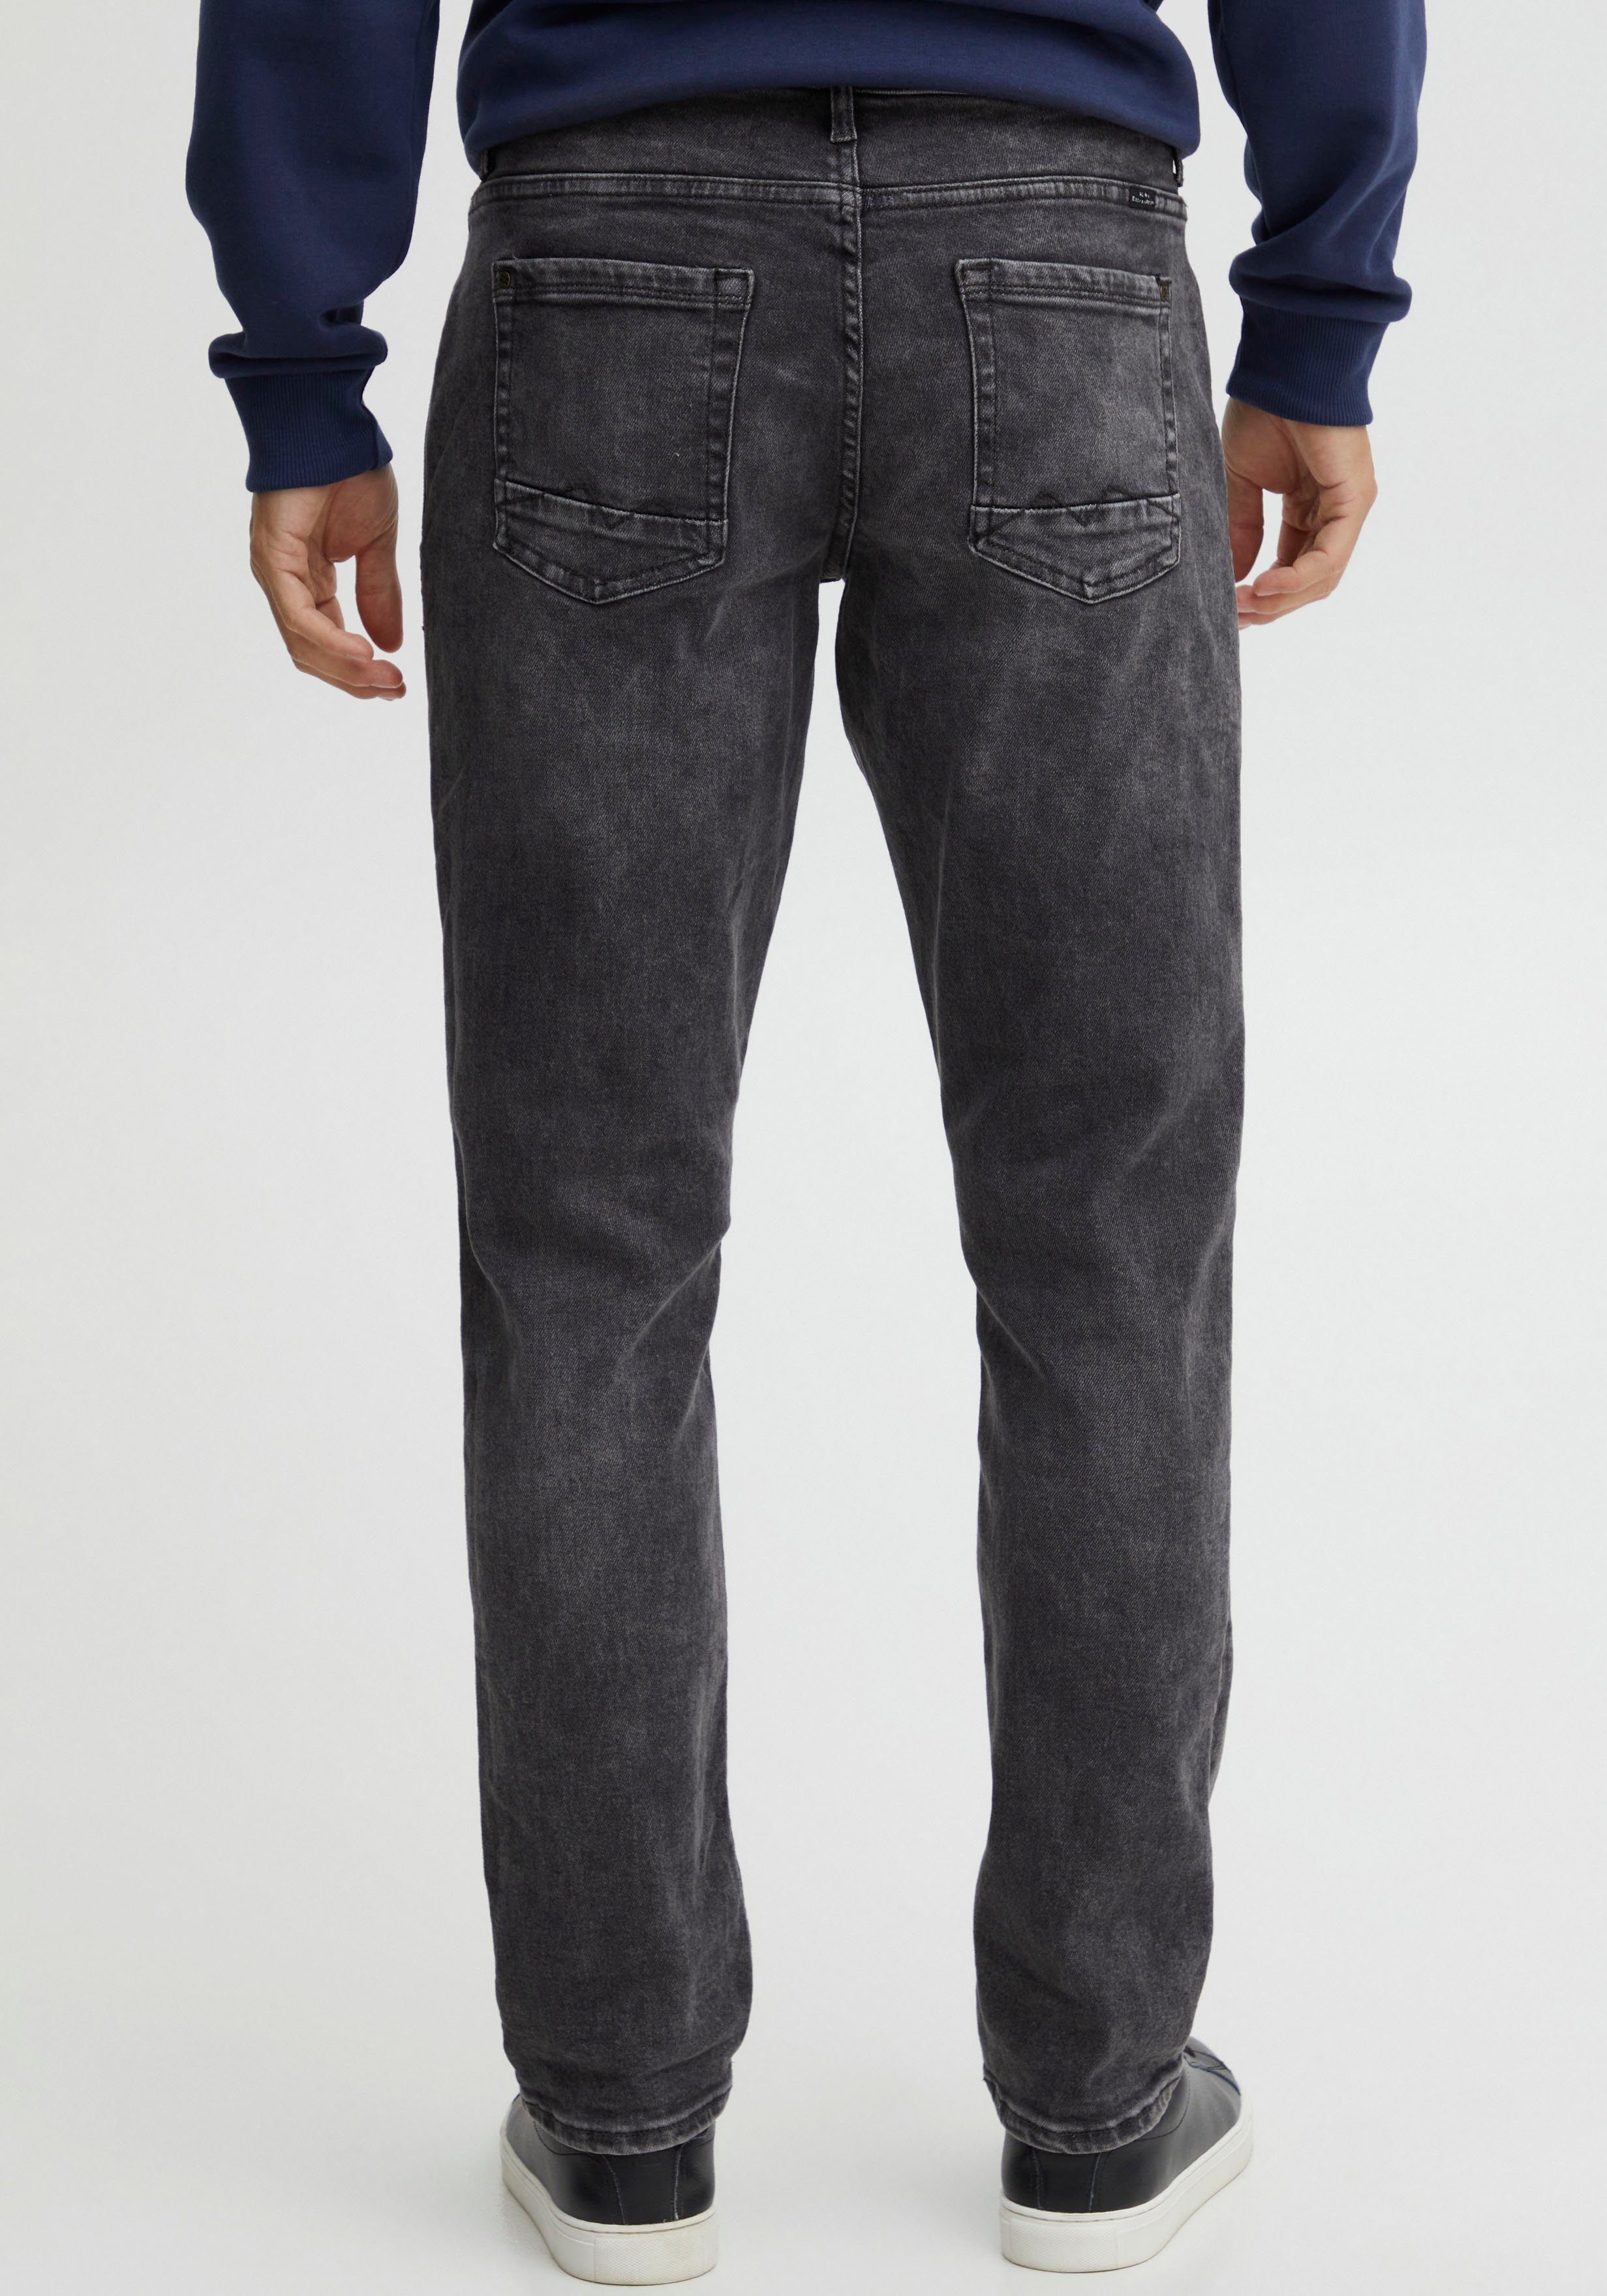 Blend 5-Pocket-Jeans BL Multiflex grey Blizzard Jeans